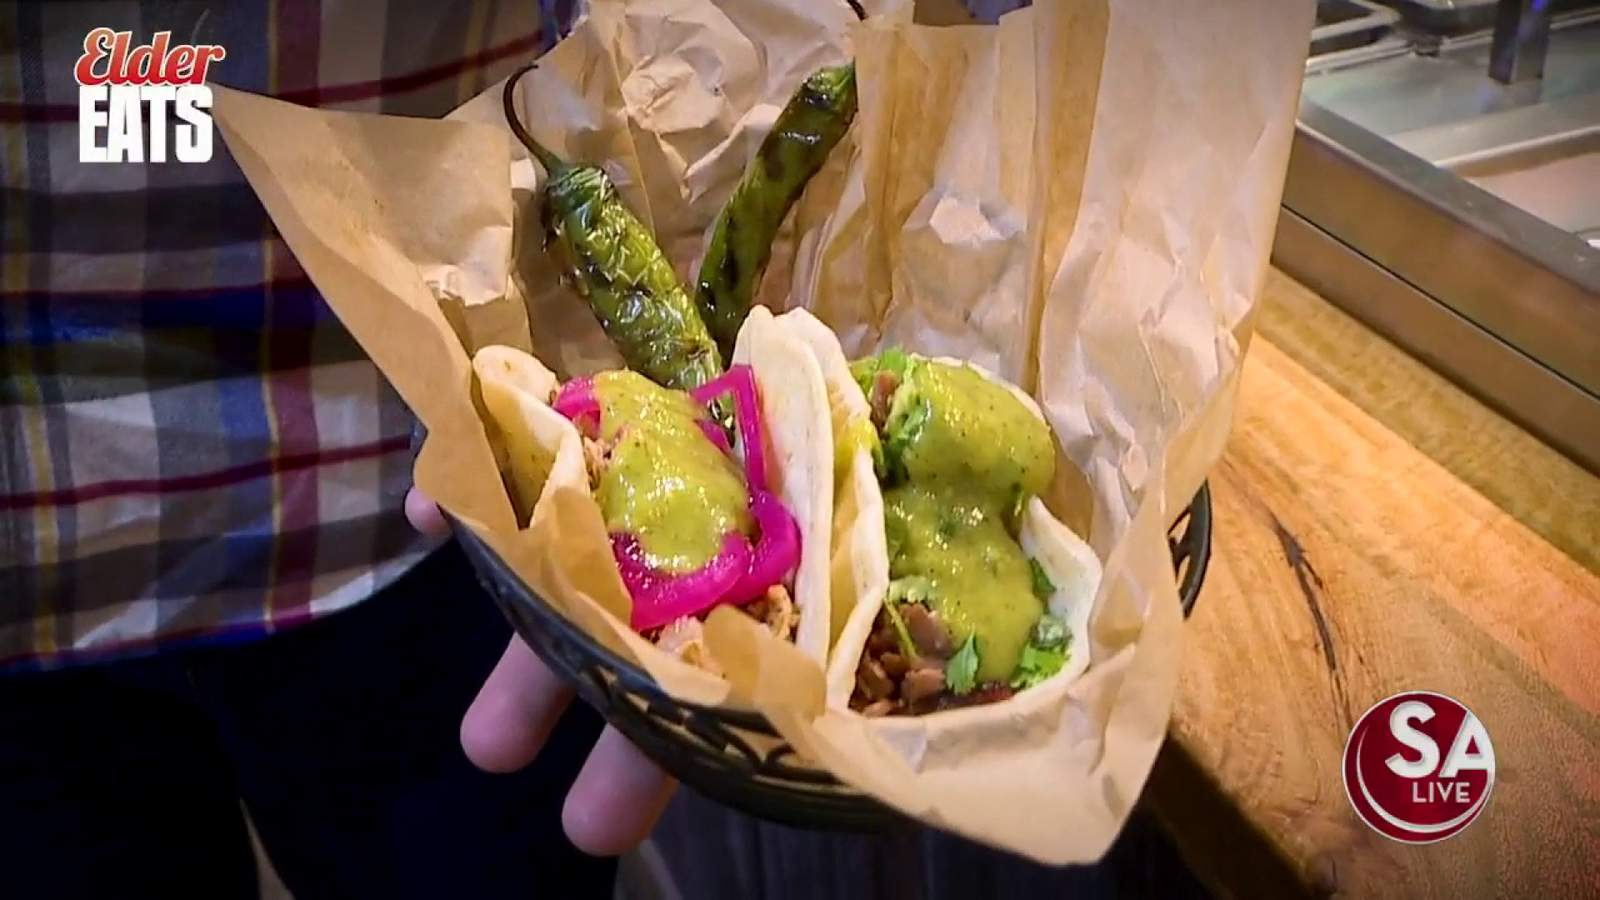 Viva Villa offers unique barbecue tacos during rodeo run